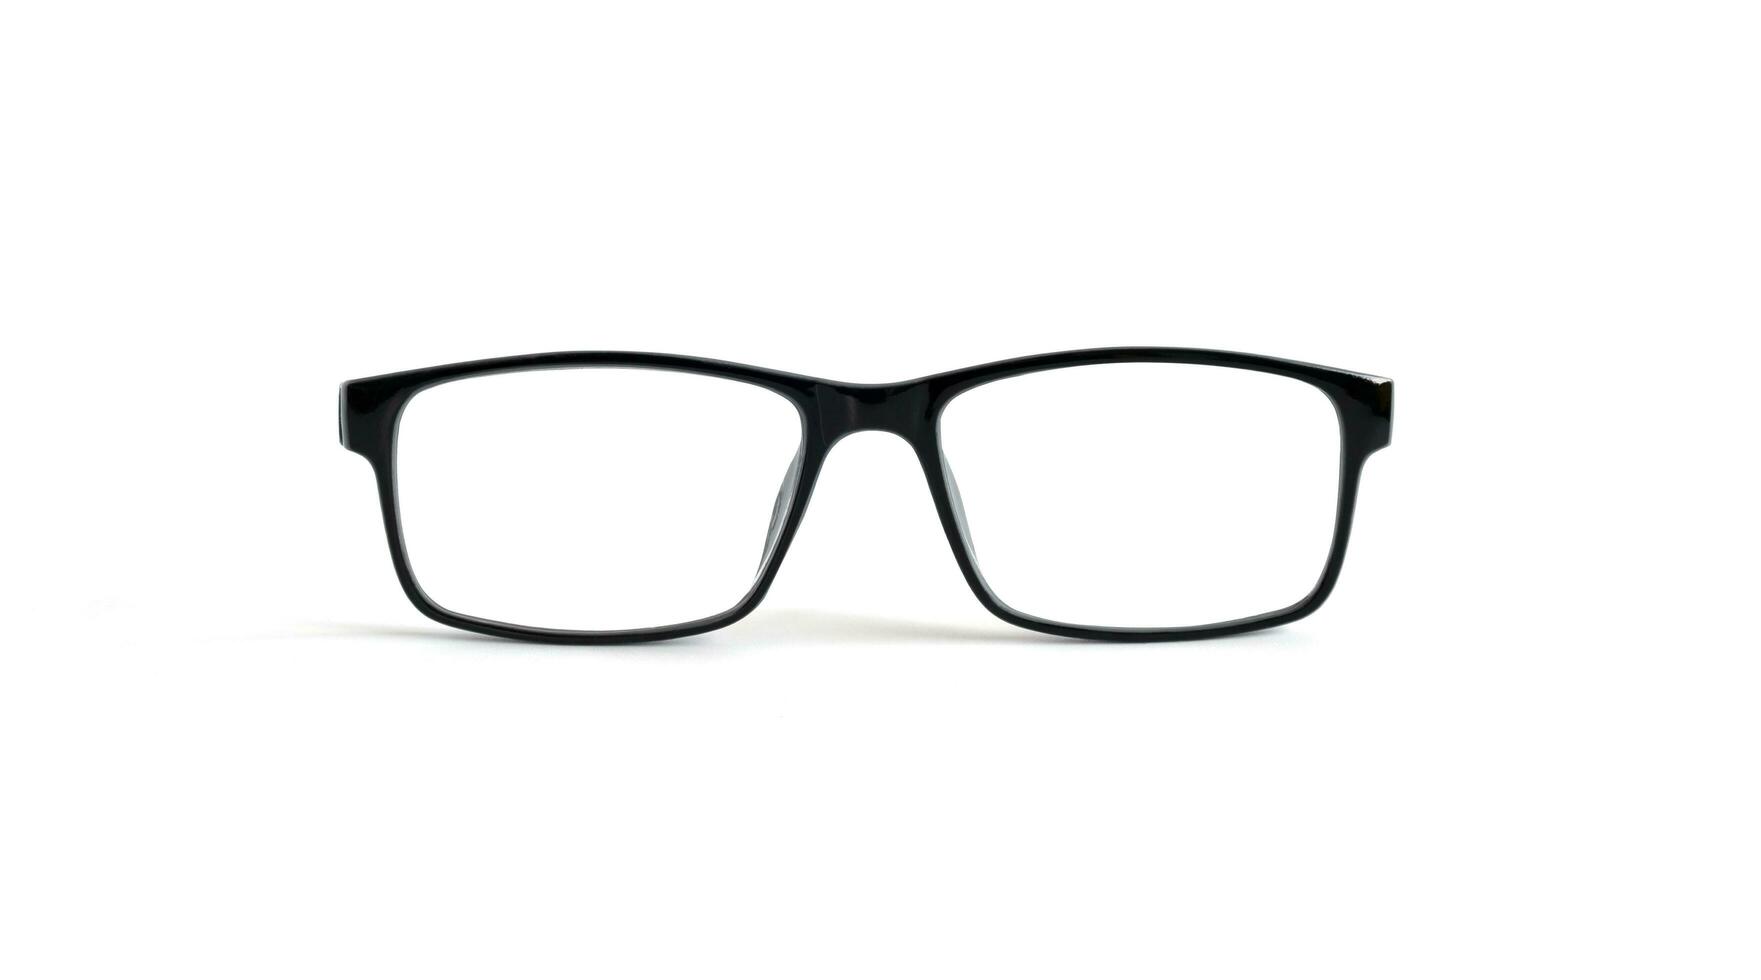 Eyeglasses with black frame, shiny. wear for eye health, isolated on white background photo